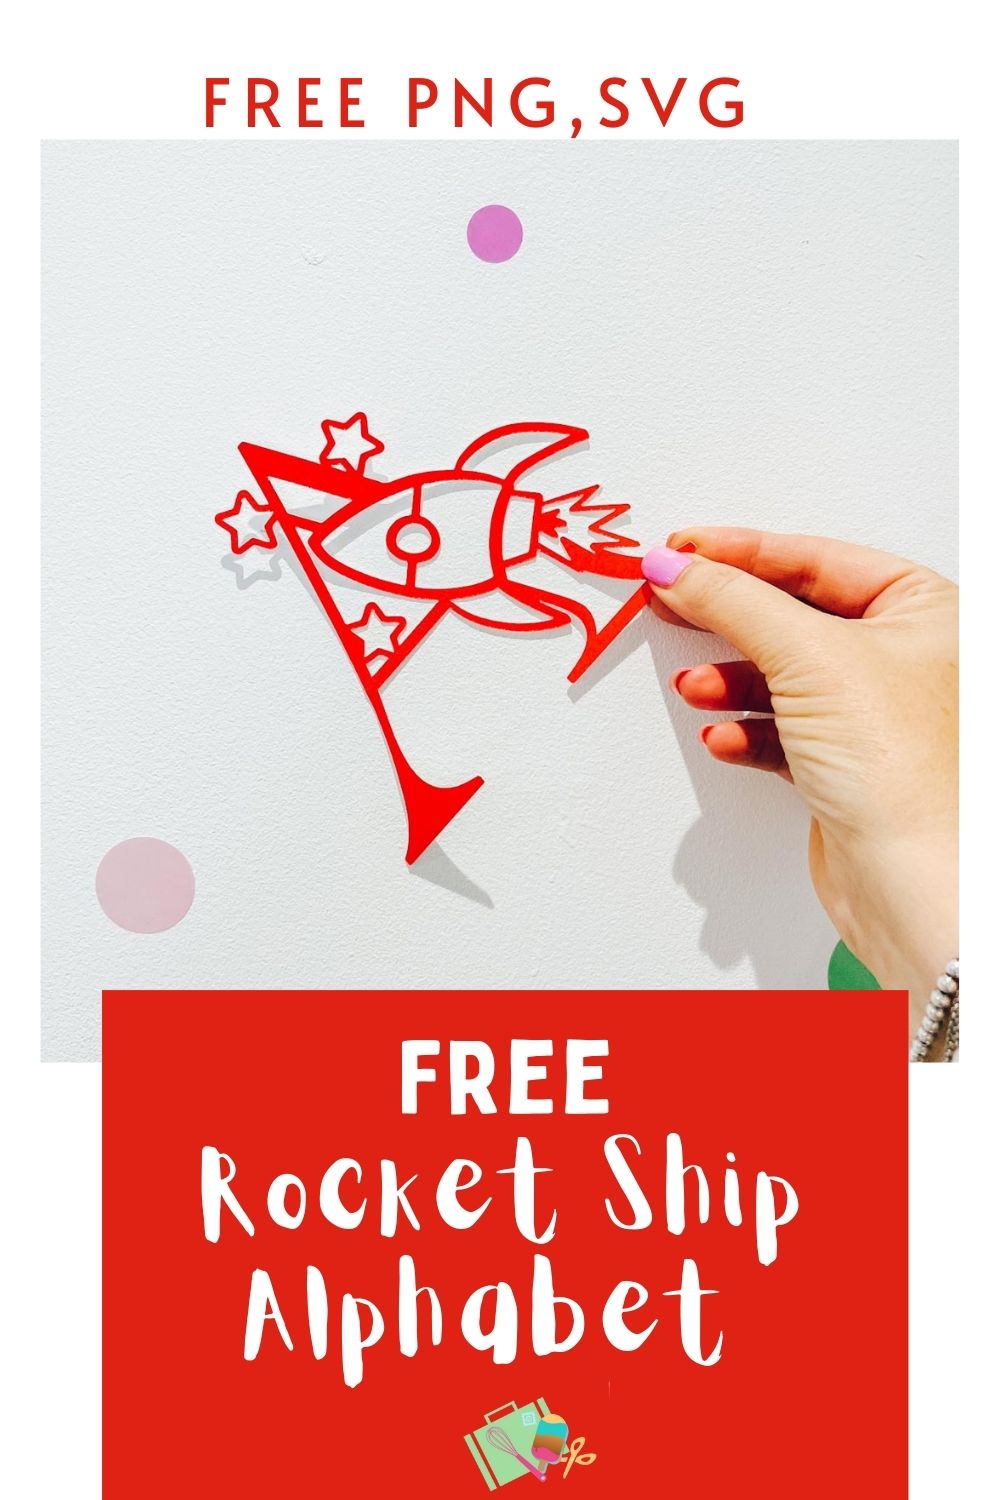 Free Rocket Ship Alphabet SVG, PNG Files-2